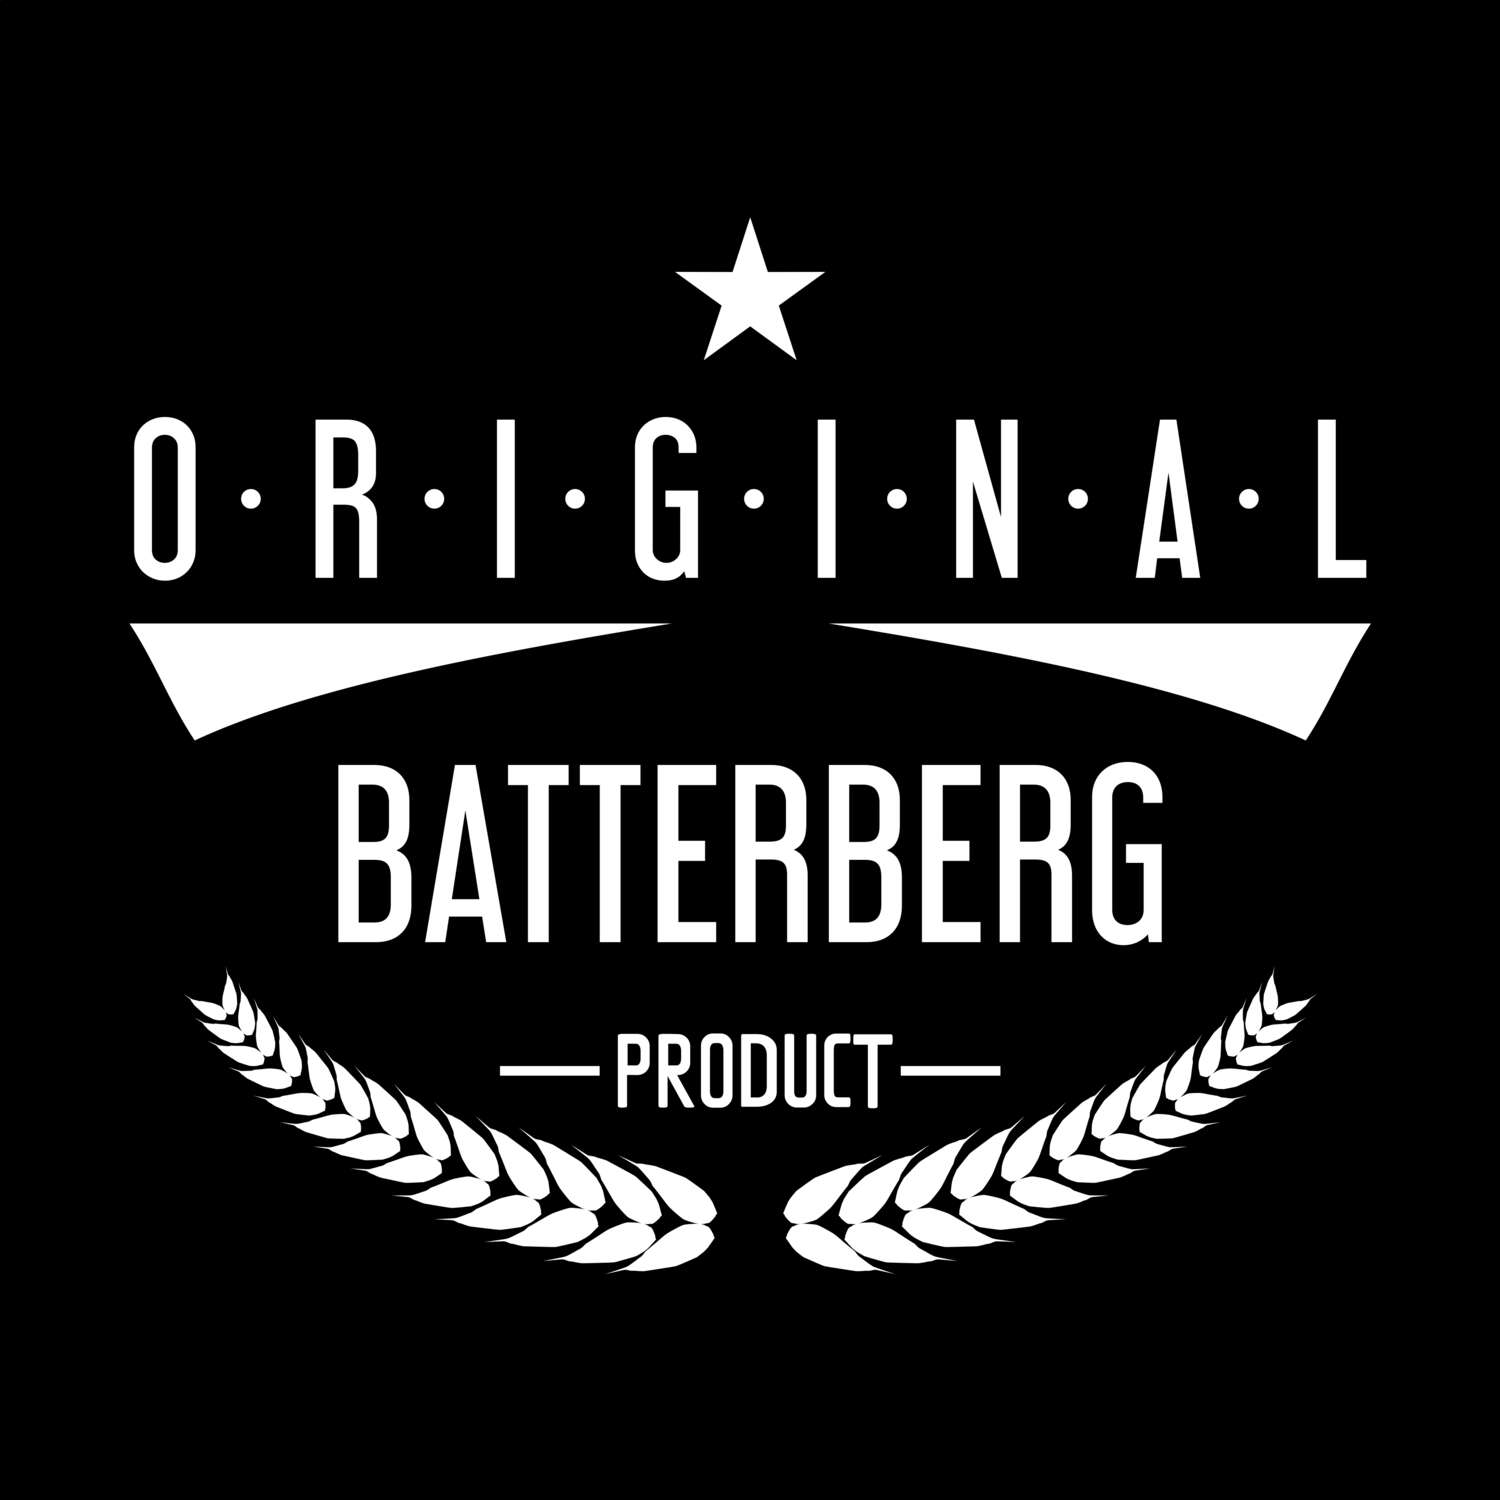 Batterberg T-Shirt »Original Product«